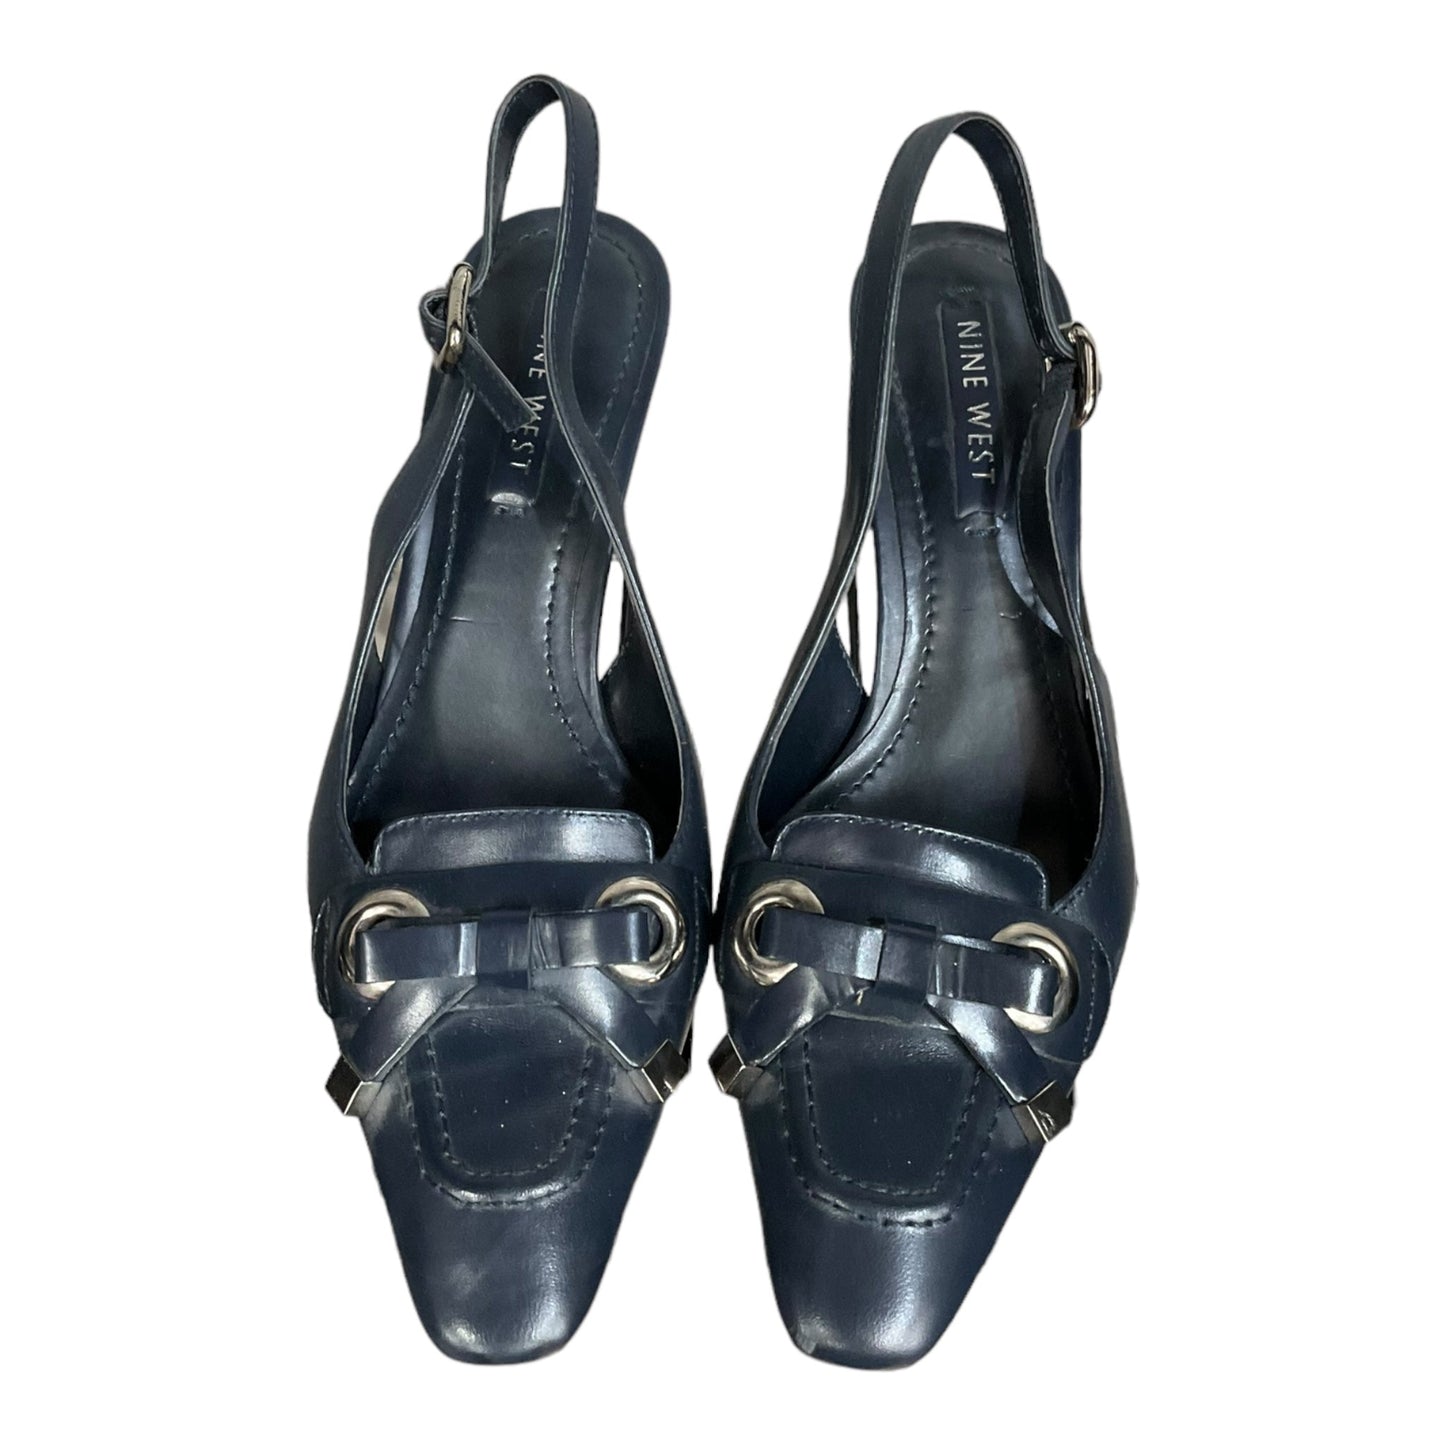 Navy Shoes Heels Stiletto Nine West, Size 6.5